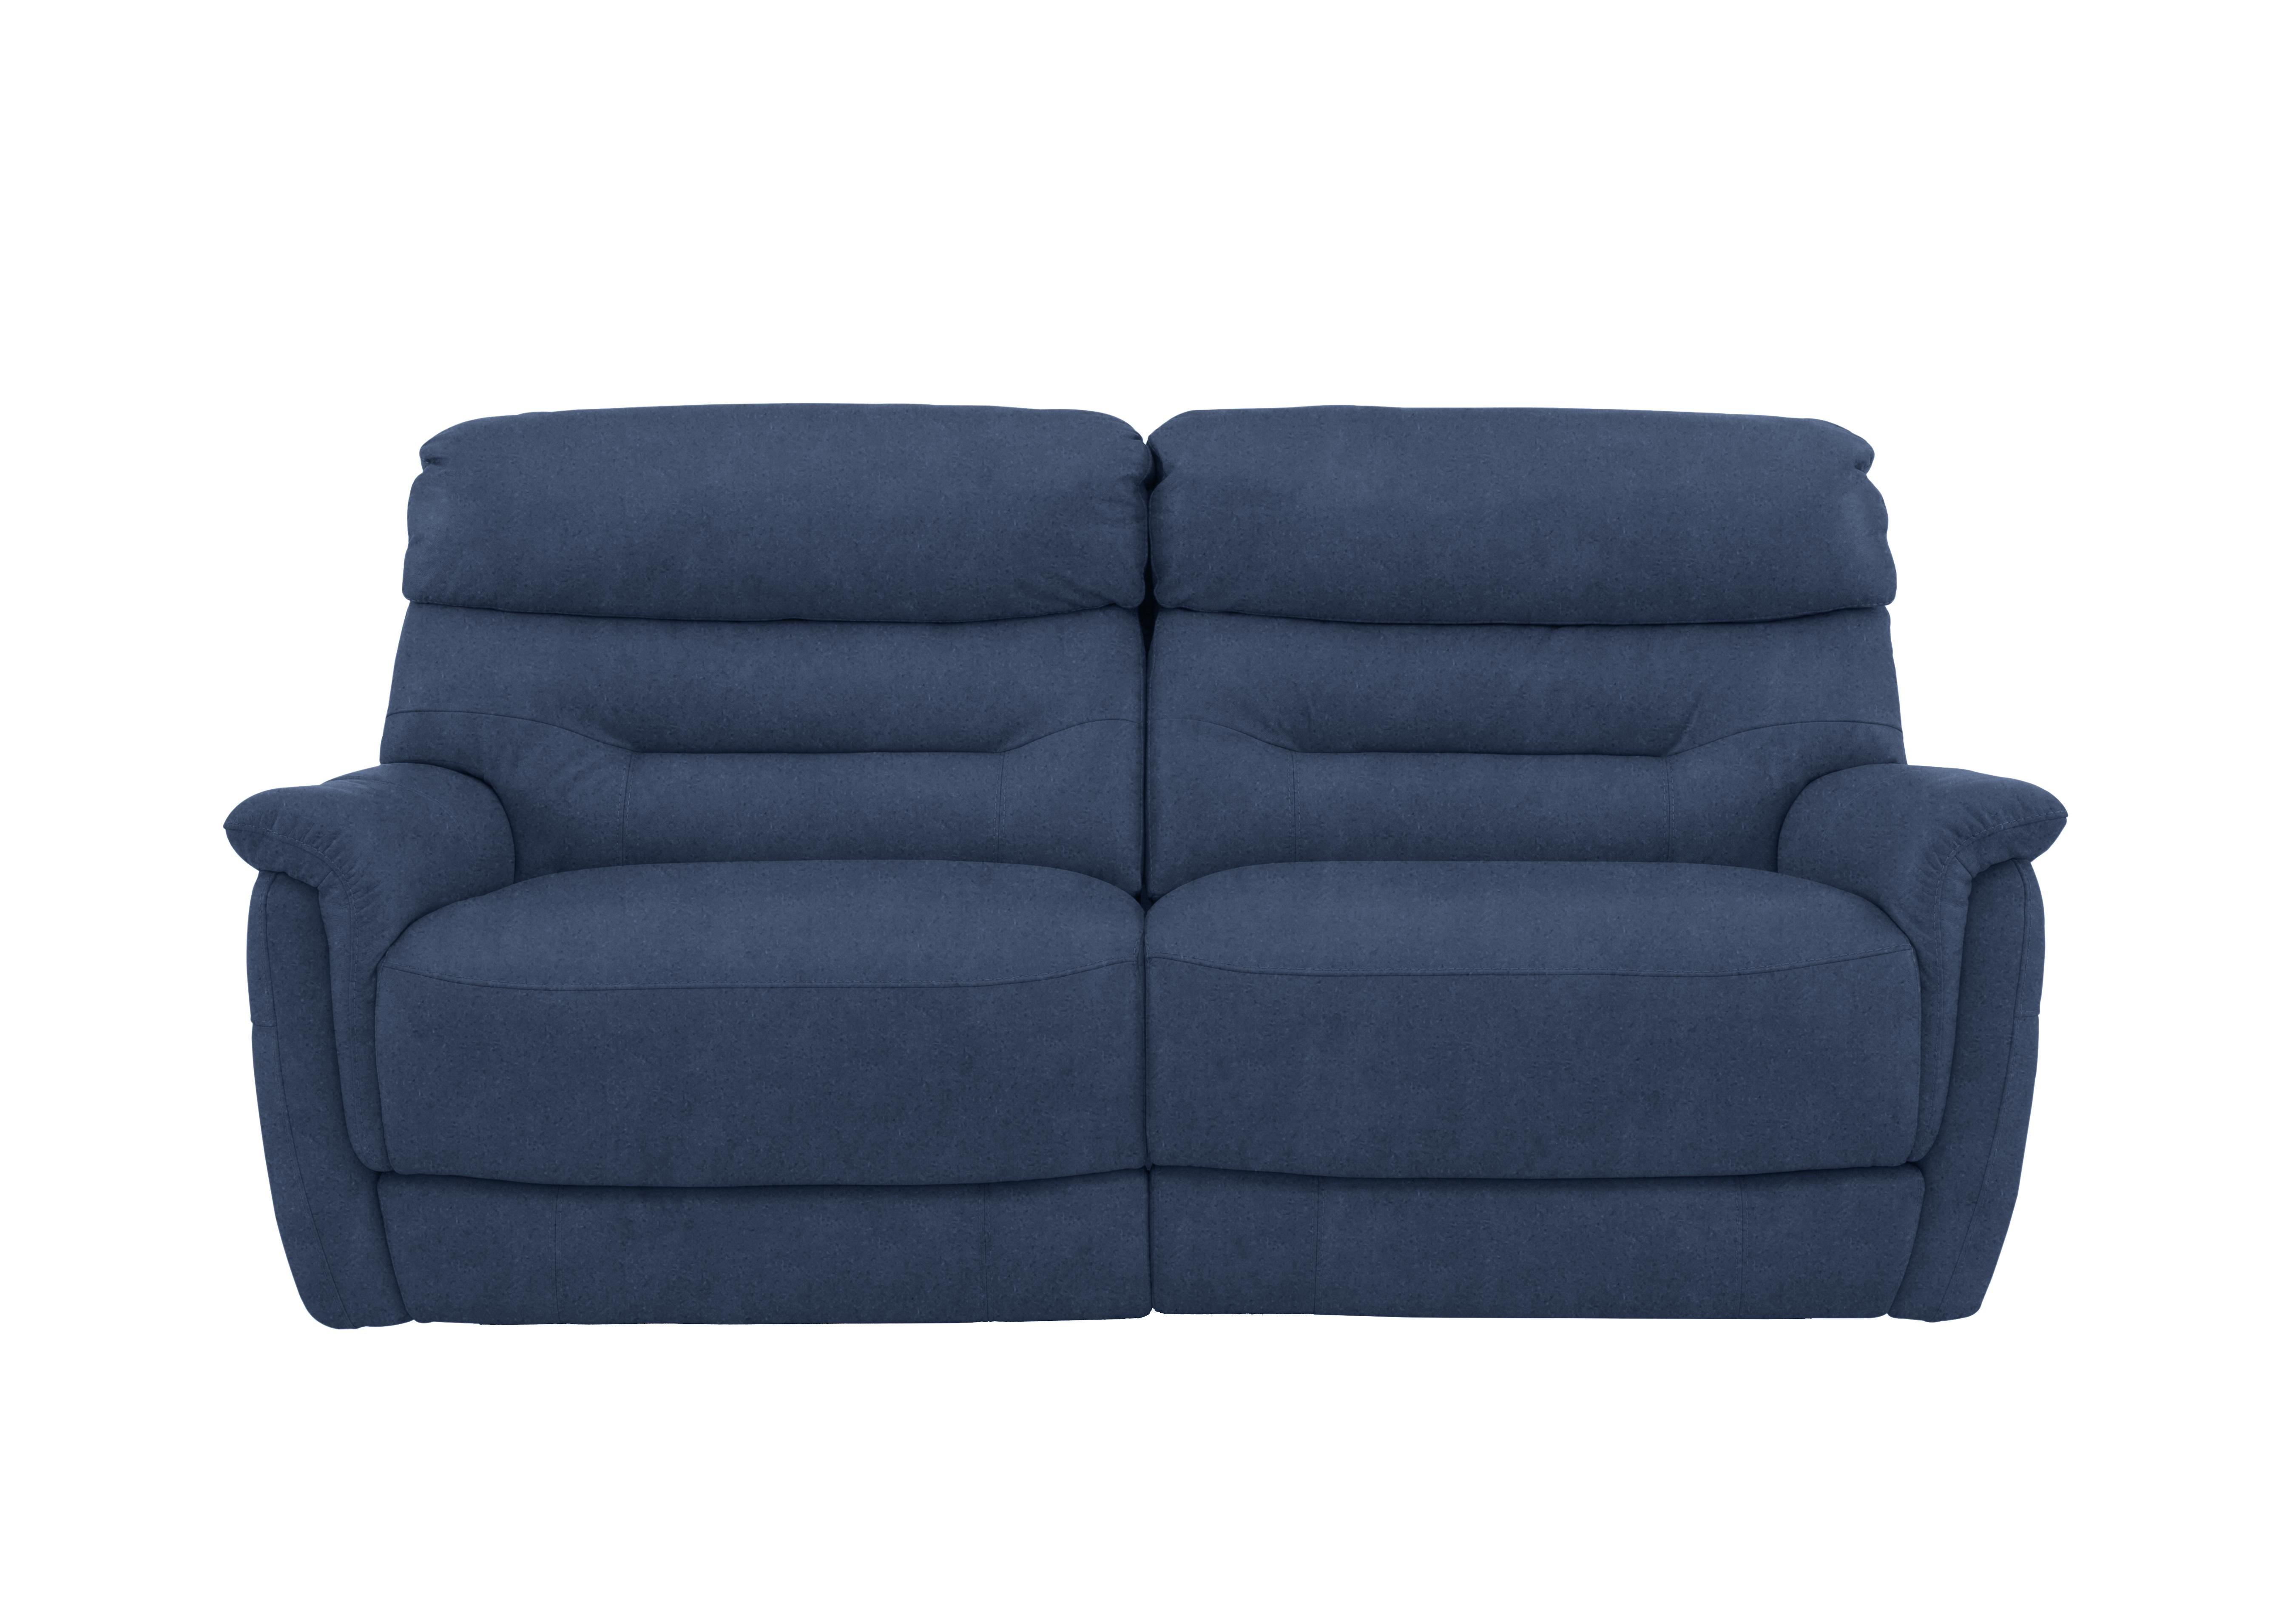 Chicago 3 Seater Fabric Sofa in Bfa-Blj-R10 Blue on Furniture Village